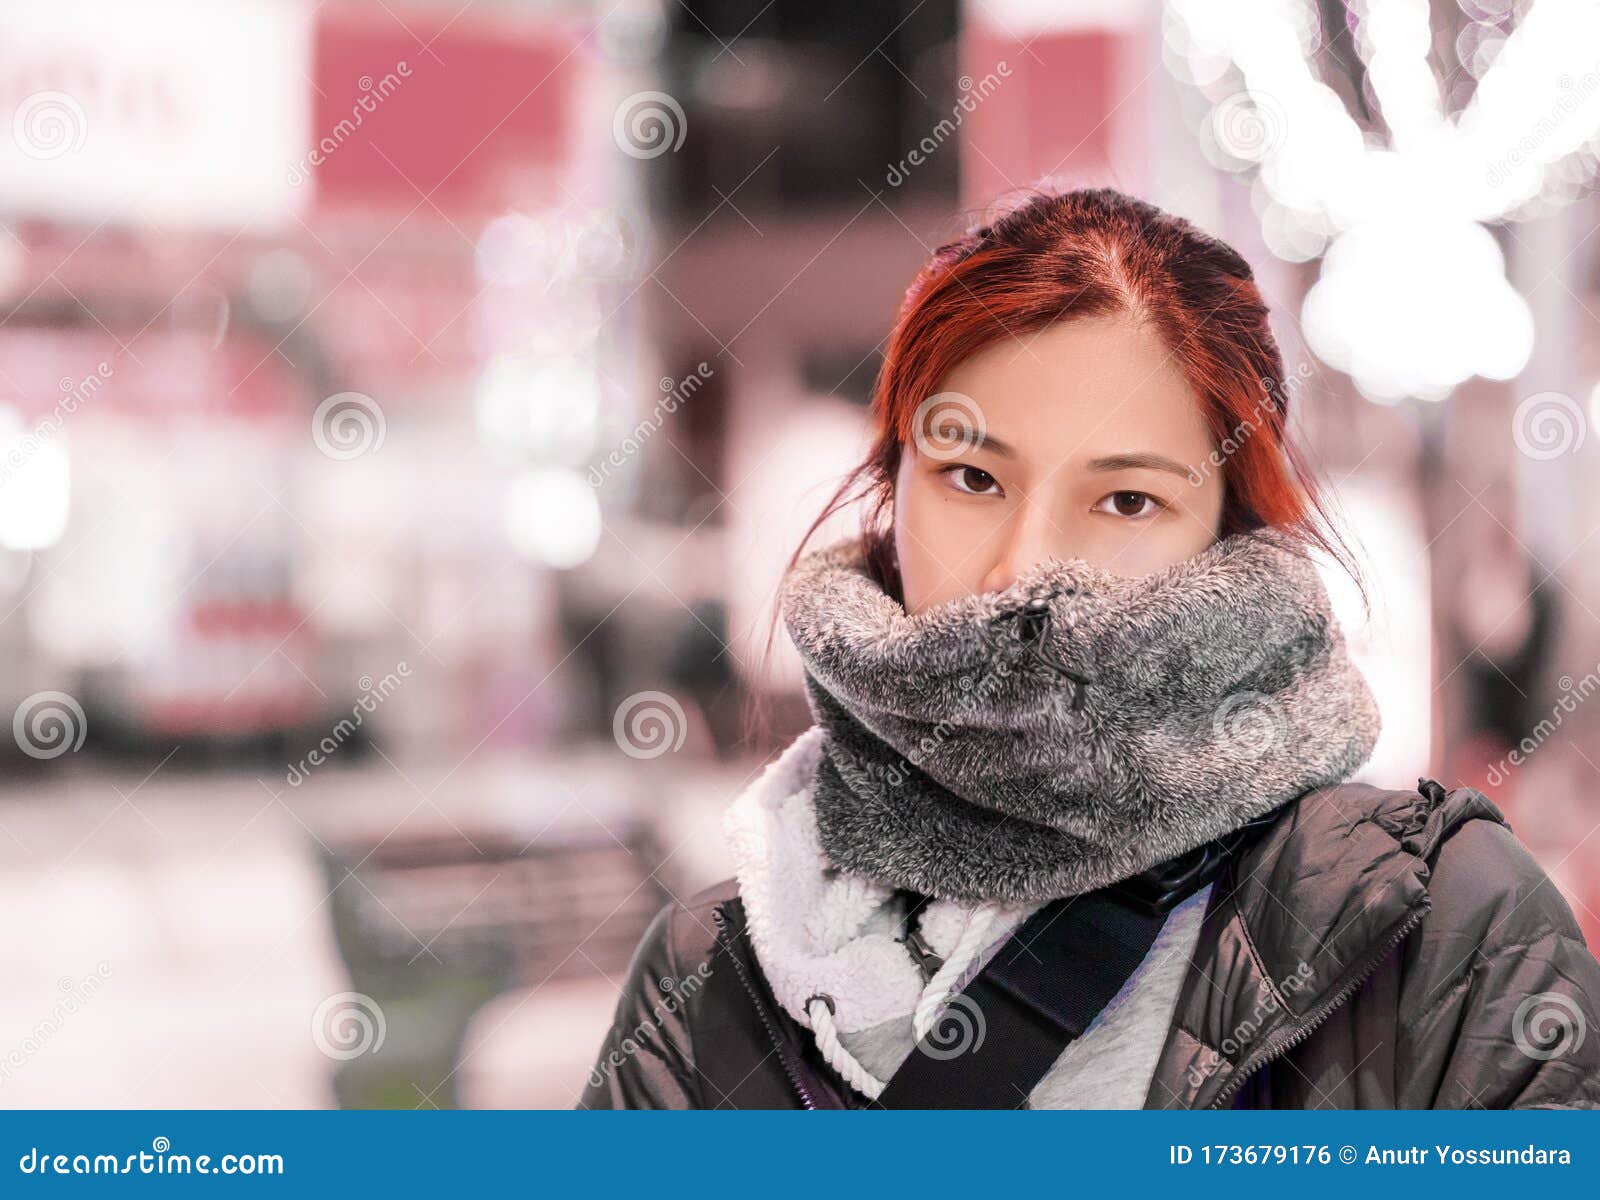 https://thumbs.dreamstime.com/z/portrait-red-hair-asian-woman-walking-busy-street-sendai-japan-beauty-winter-fashion-concept-portrait-red-173679176.jpg